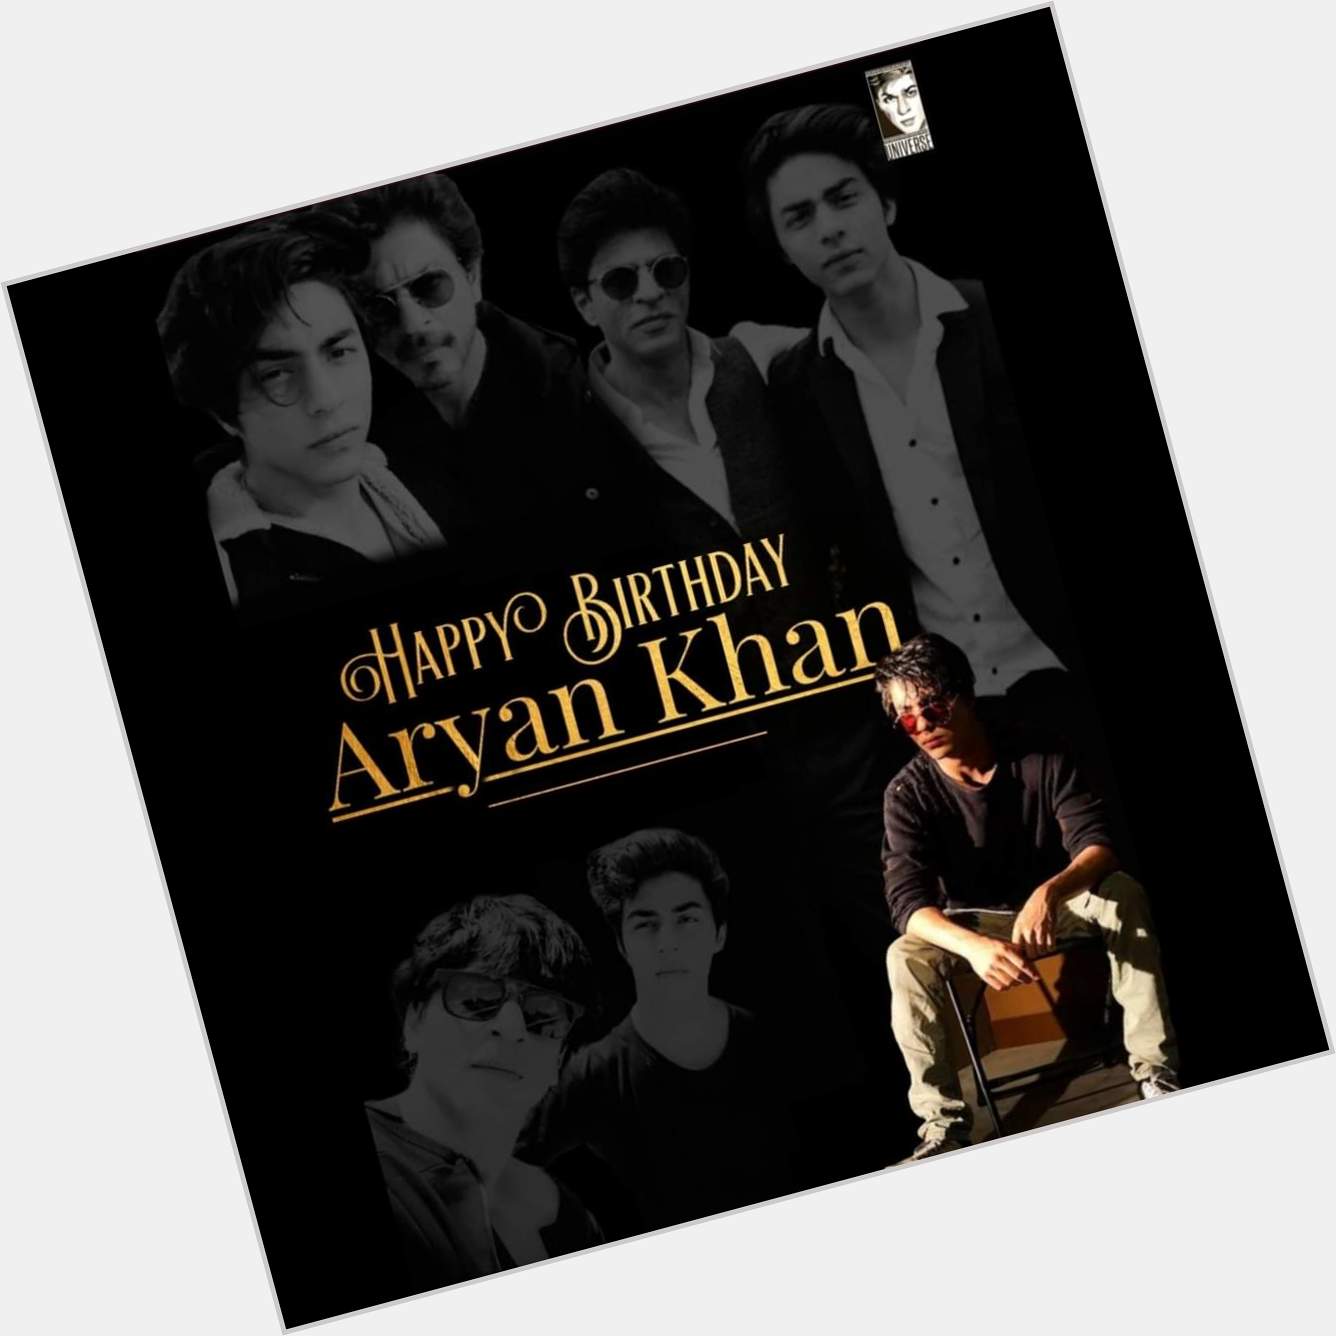 Happy Birthday aryan khan 